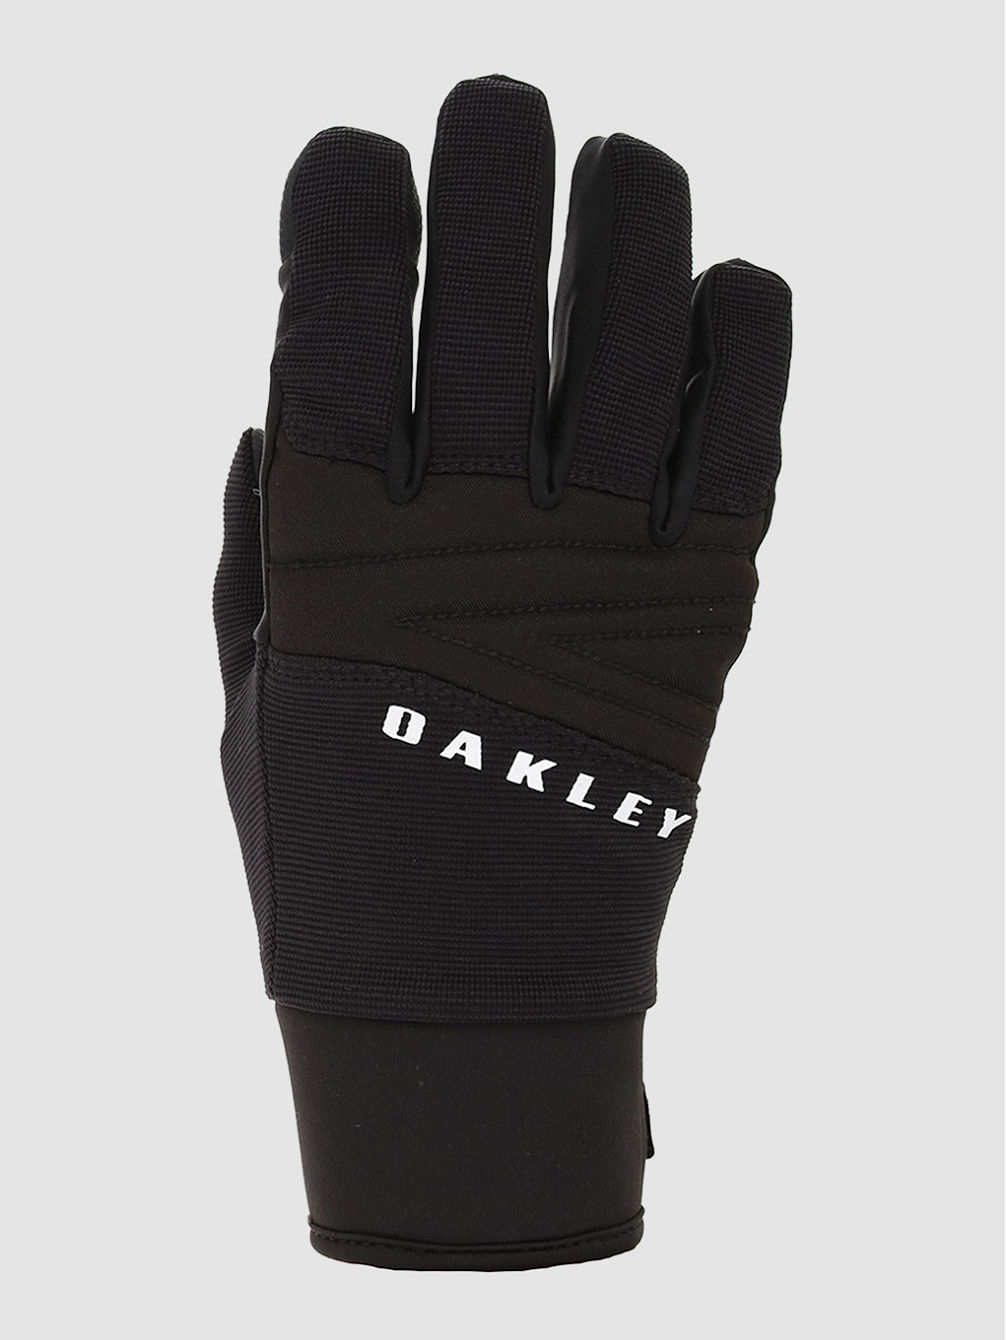 Factory Ellipse Handschuhe